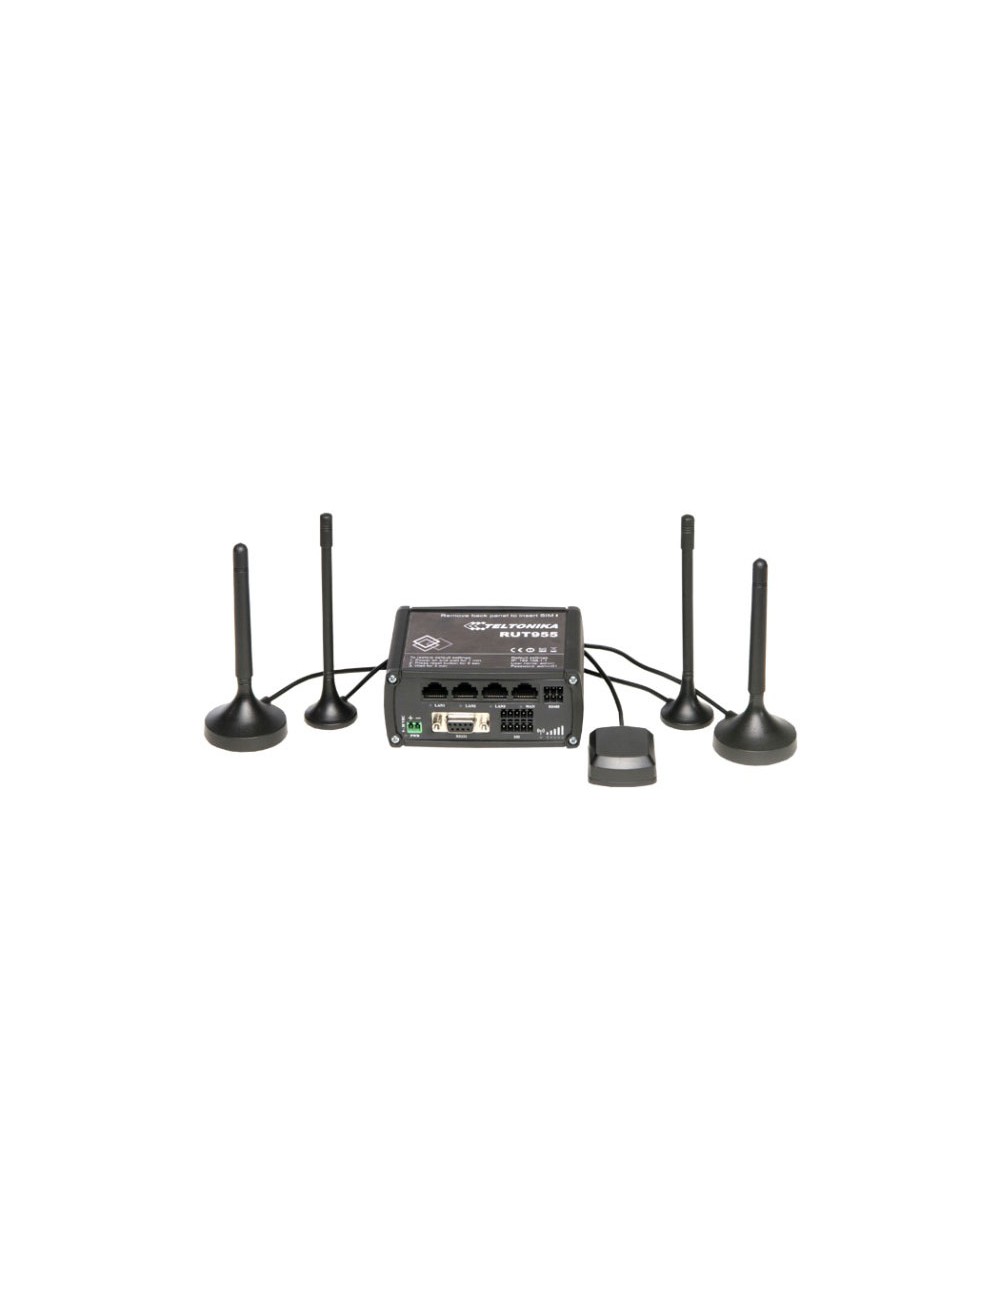 teltonika-rut955-wireless-router-1.jpg